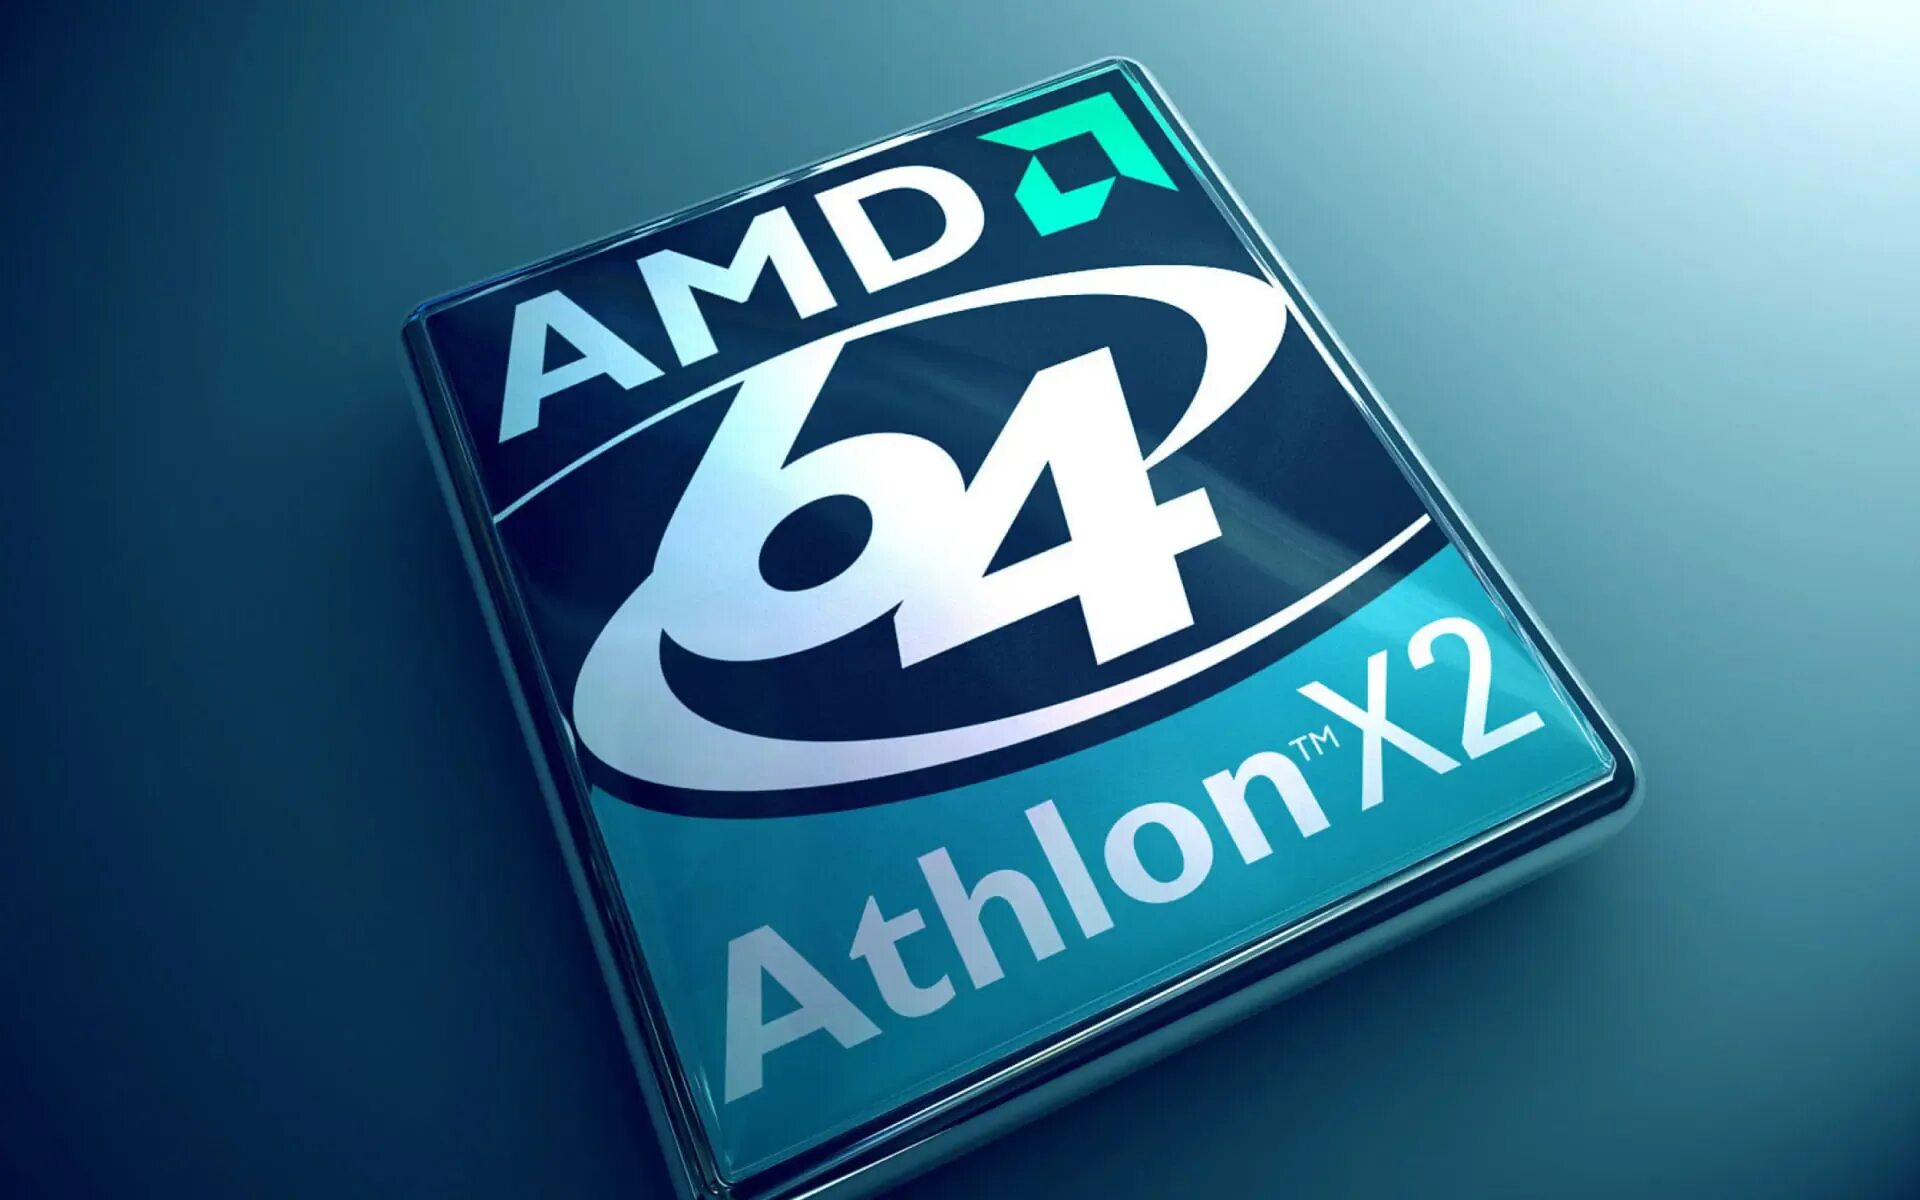 Athlon 64 logo. Логотип АМД. AMD картинки. AMD Athlon 64 x2 logo.